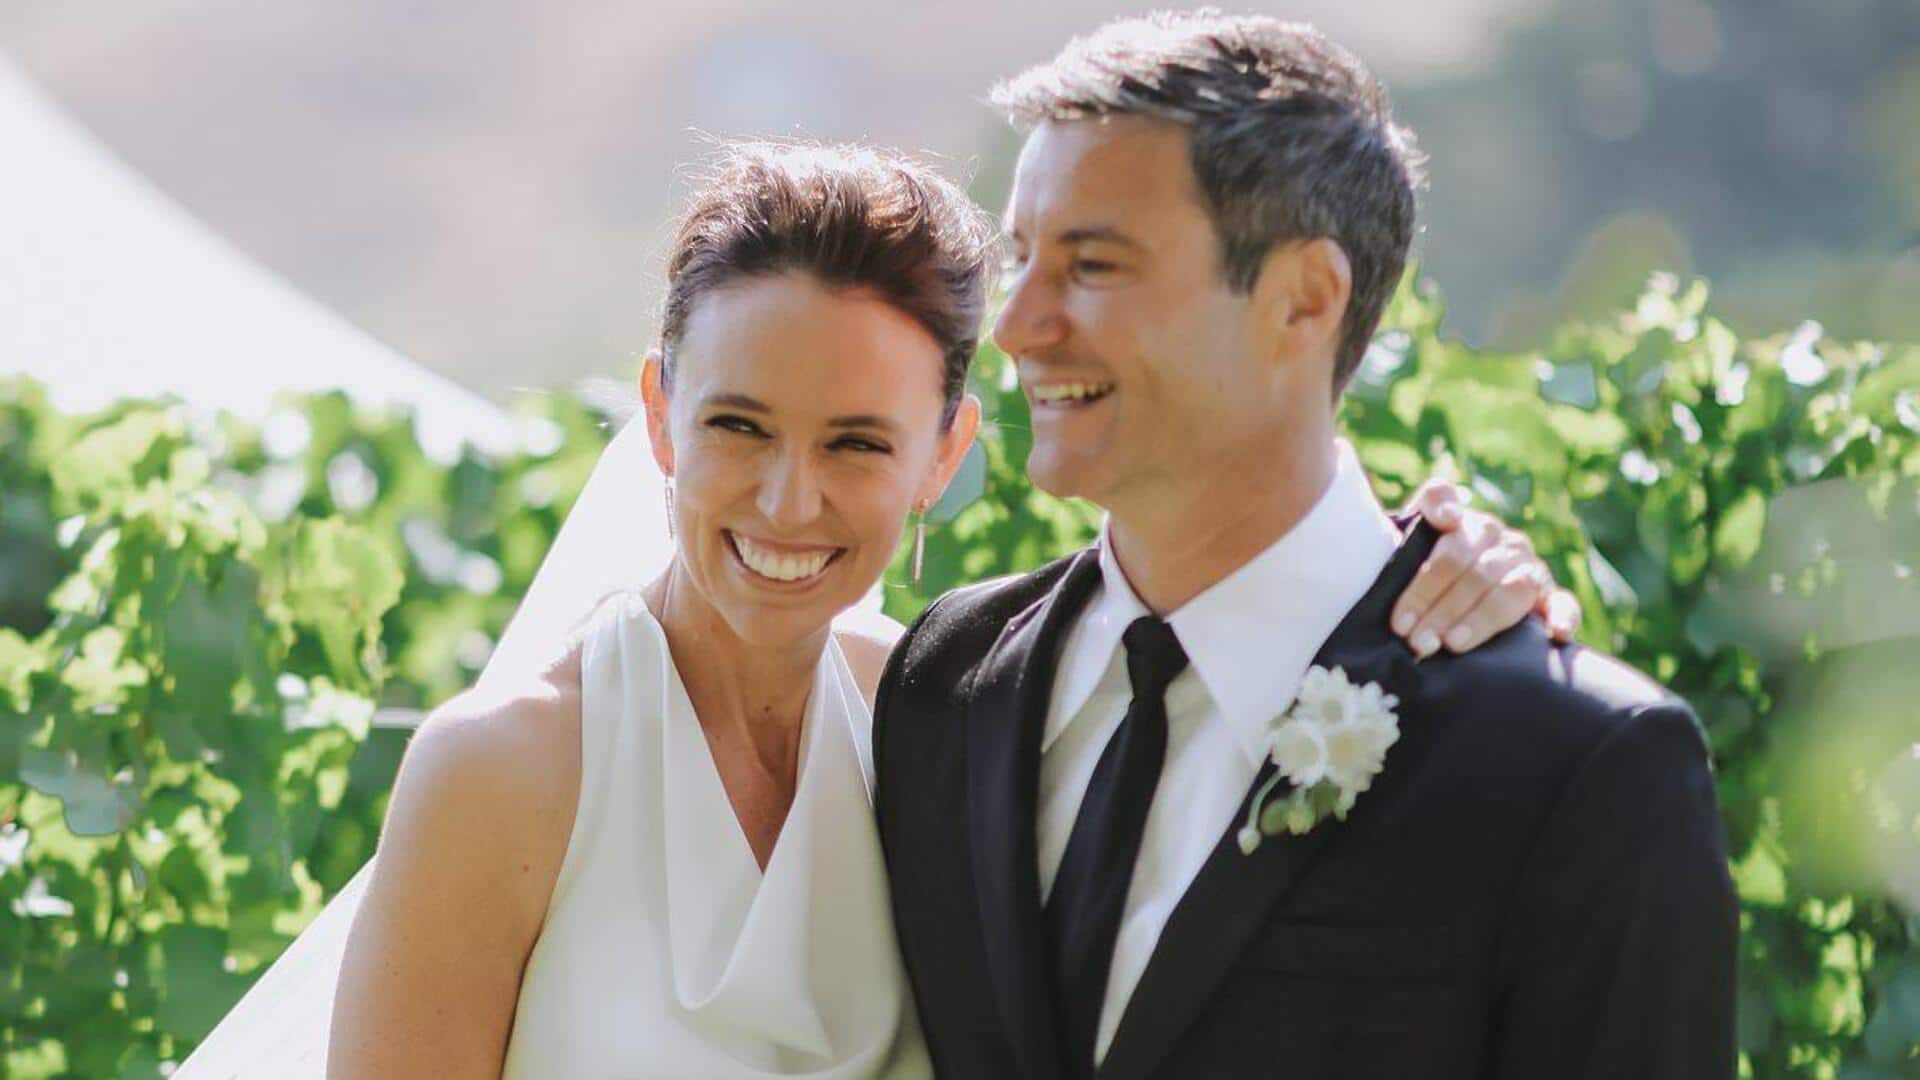 Ex-New Zealand PM Jacinda Ardern marries longtime partner Clarke Gayford